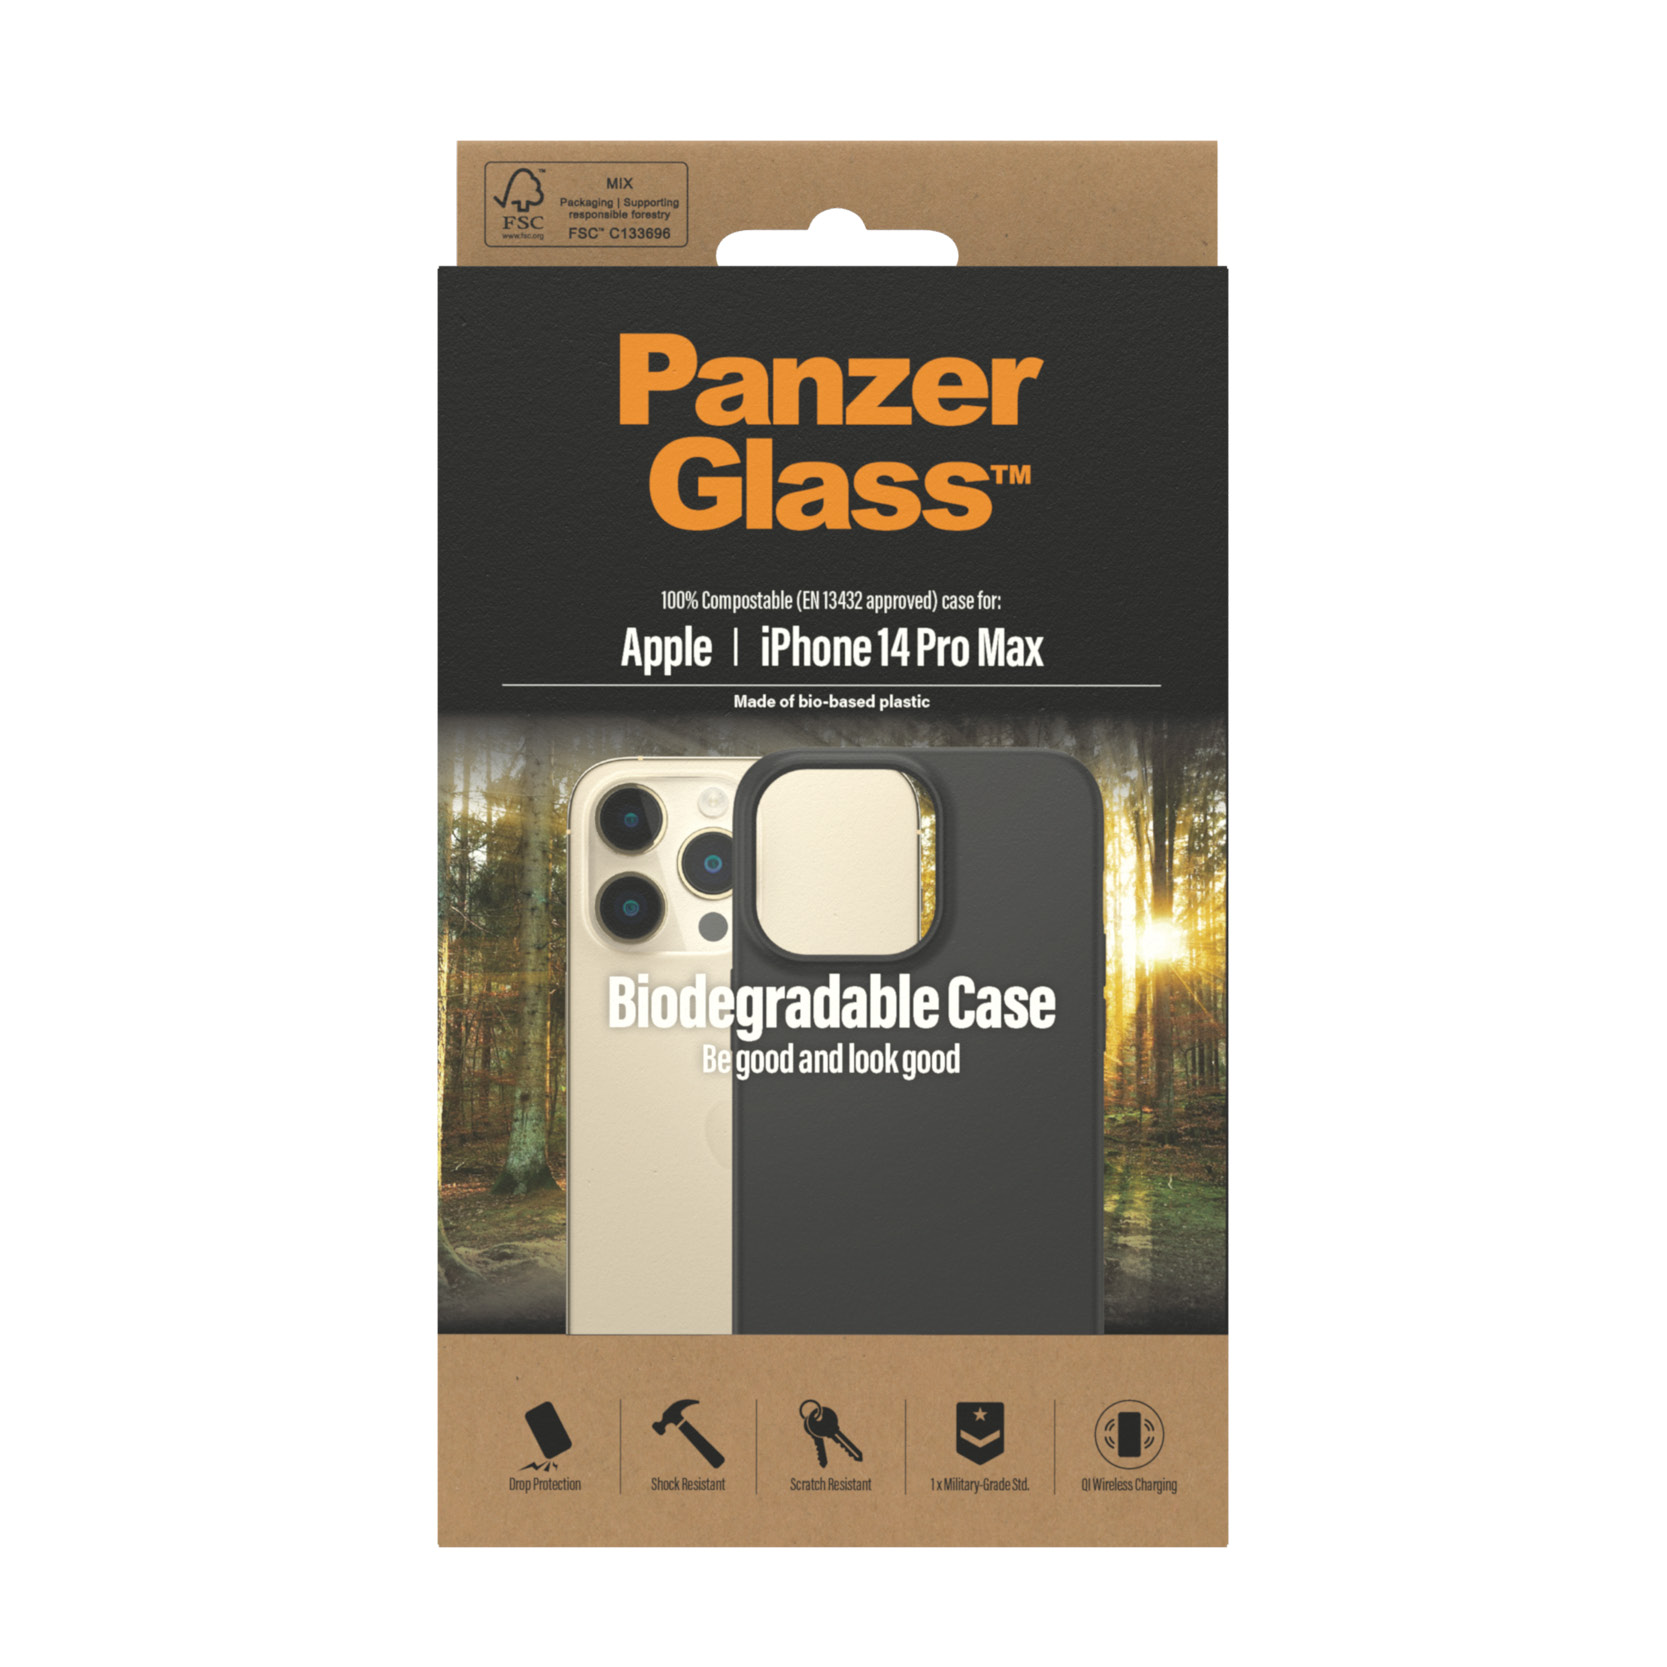 PanzerGlasstm Apple iPhone 14 Pro Max biodegradabil | Negru thumb